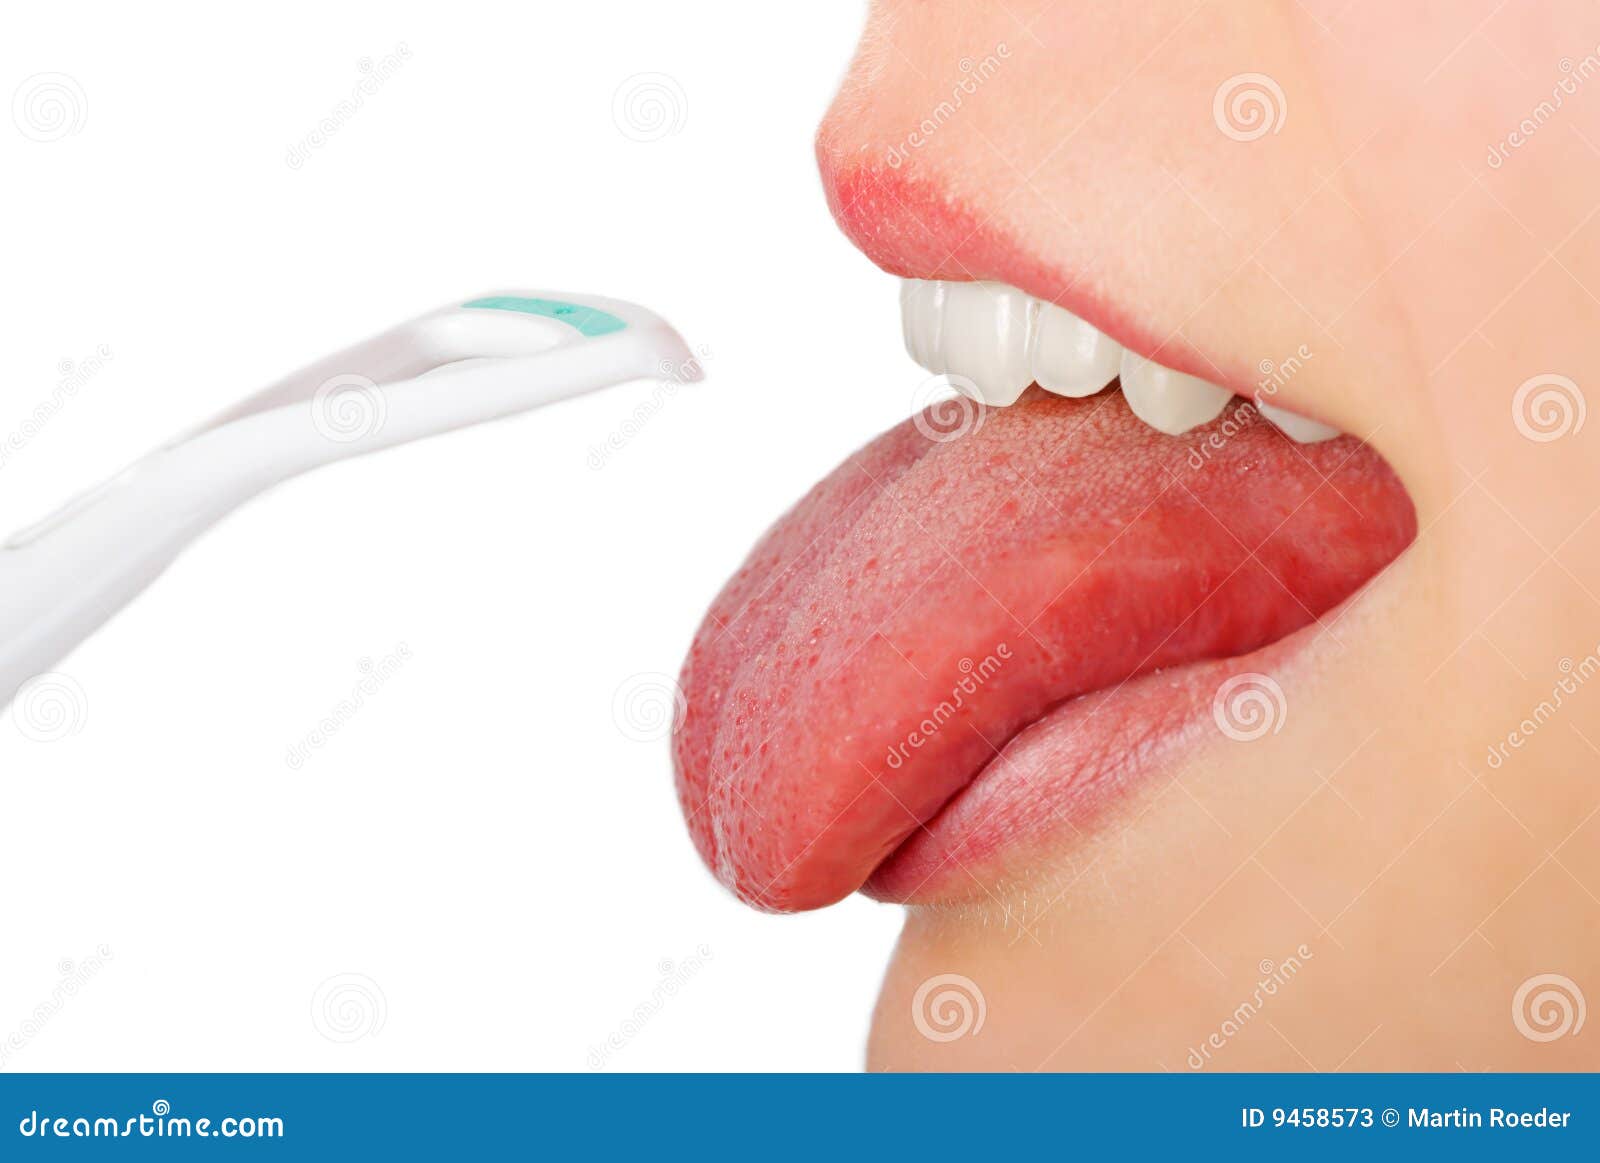 tongue hygiene